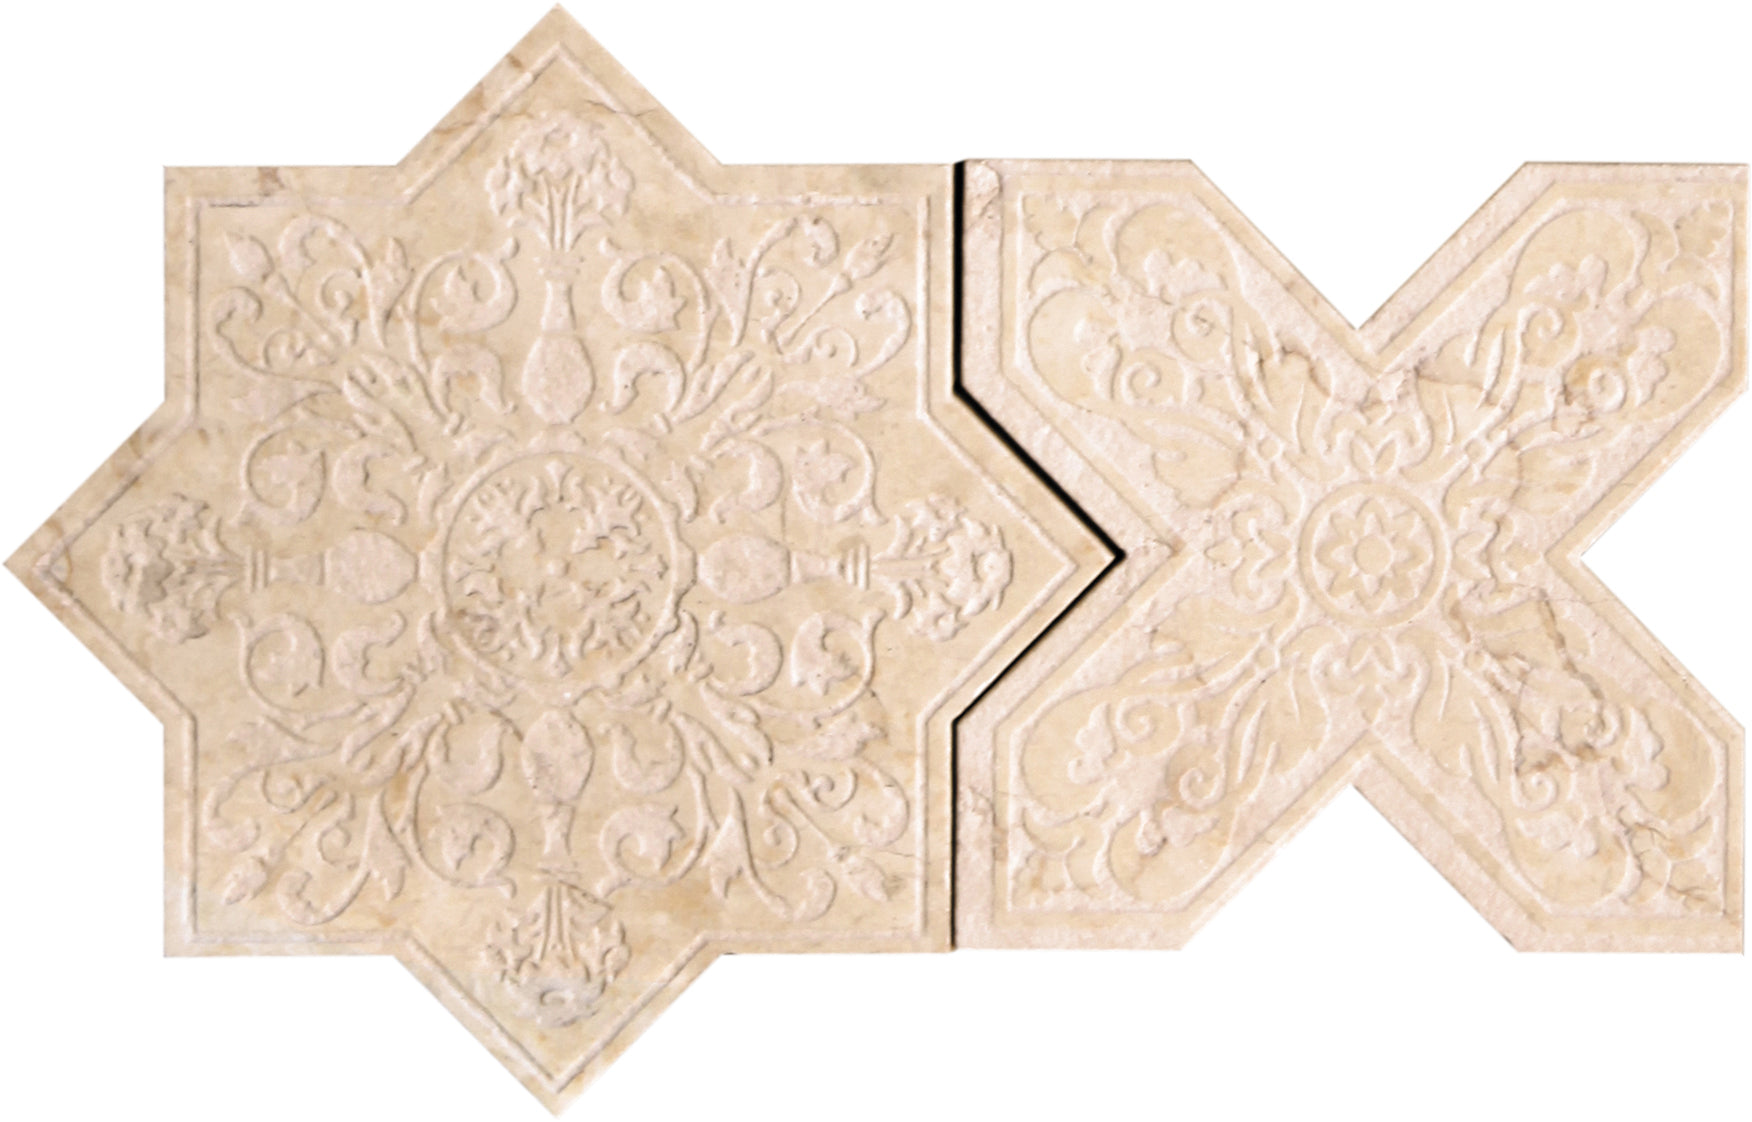 mir skalini pantheon pantheon crema wall and floor mosaic distributed by surface group natural materials